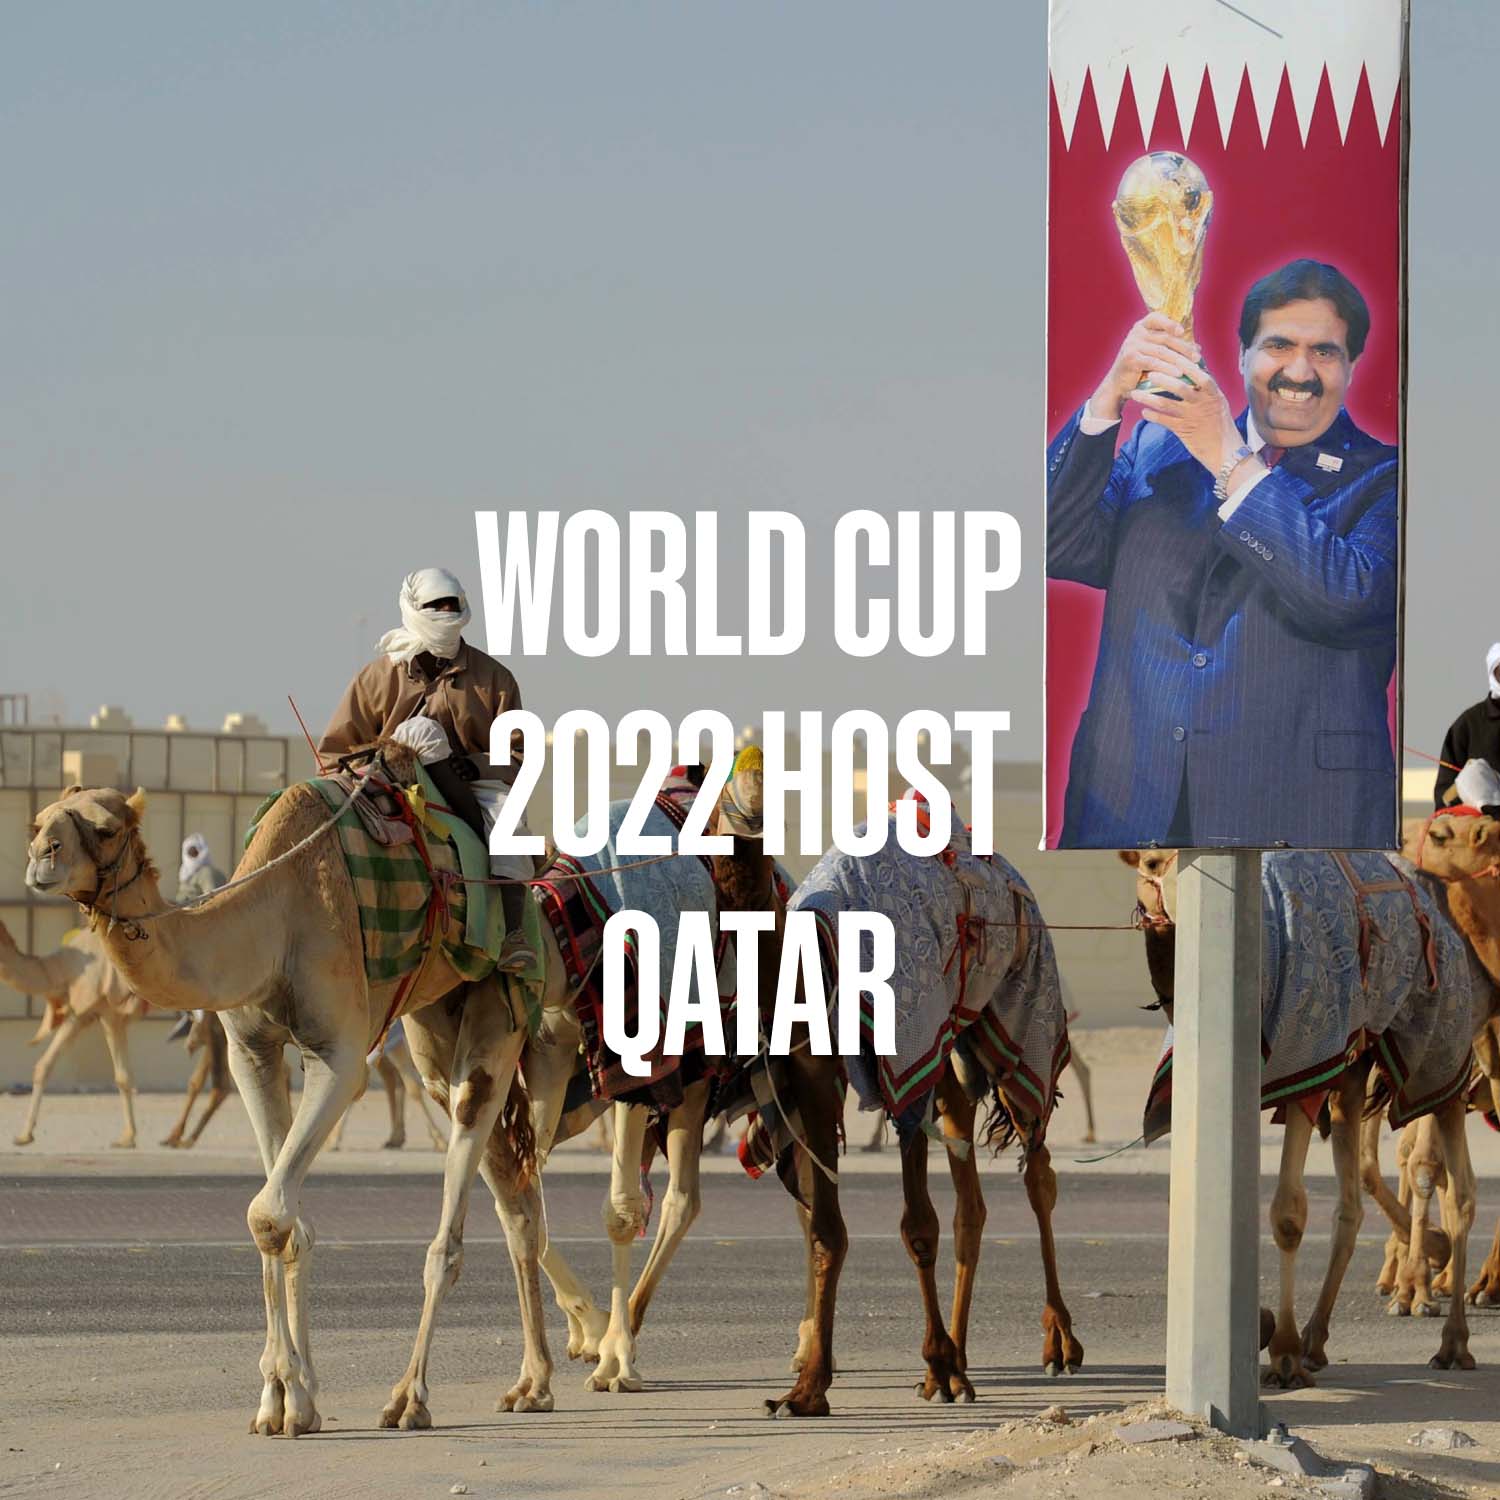 World Cup 2022 Host Qatar